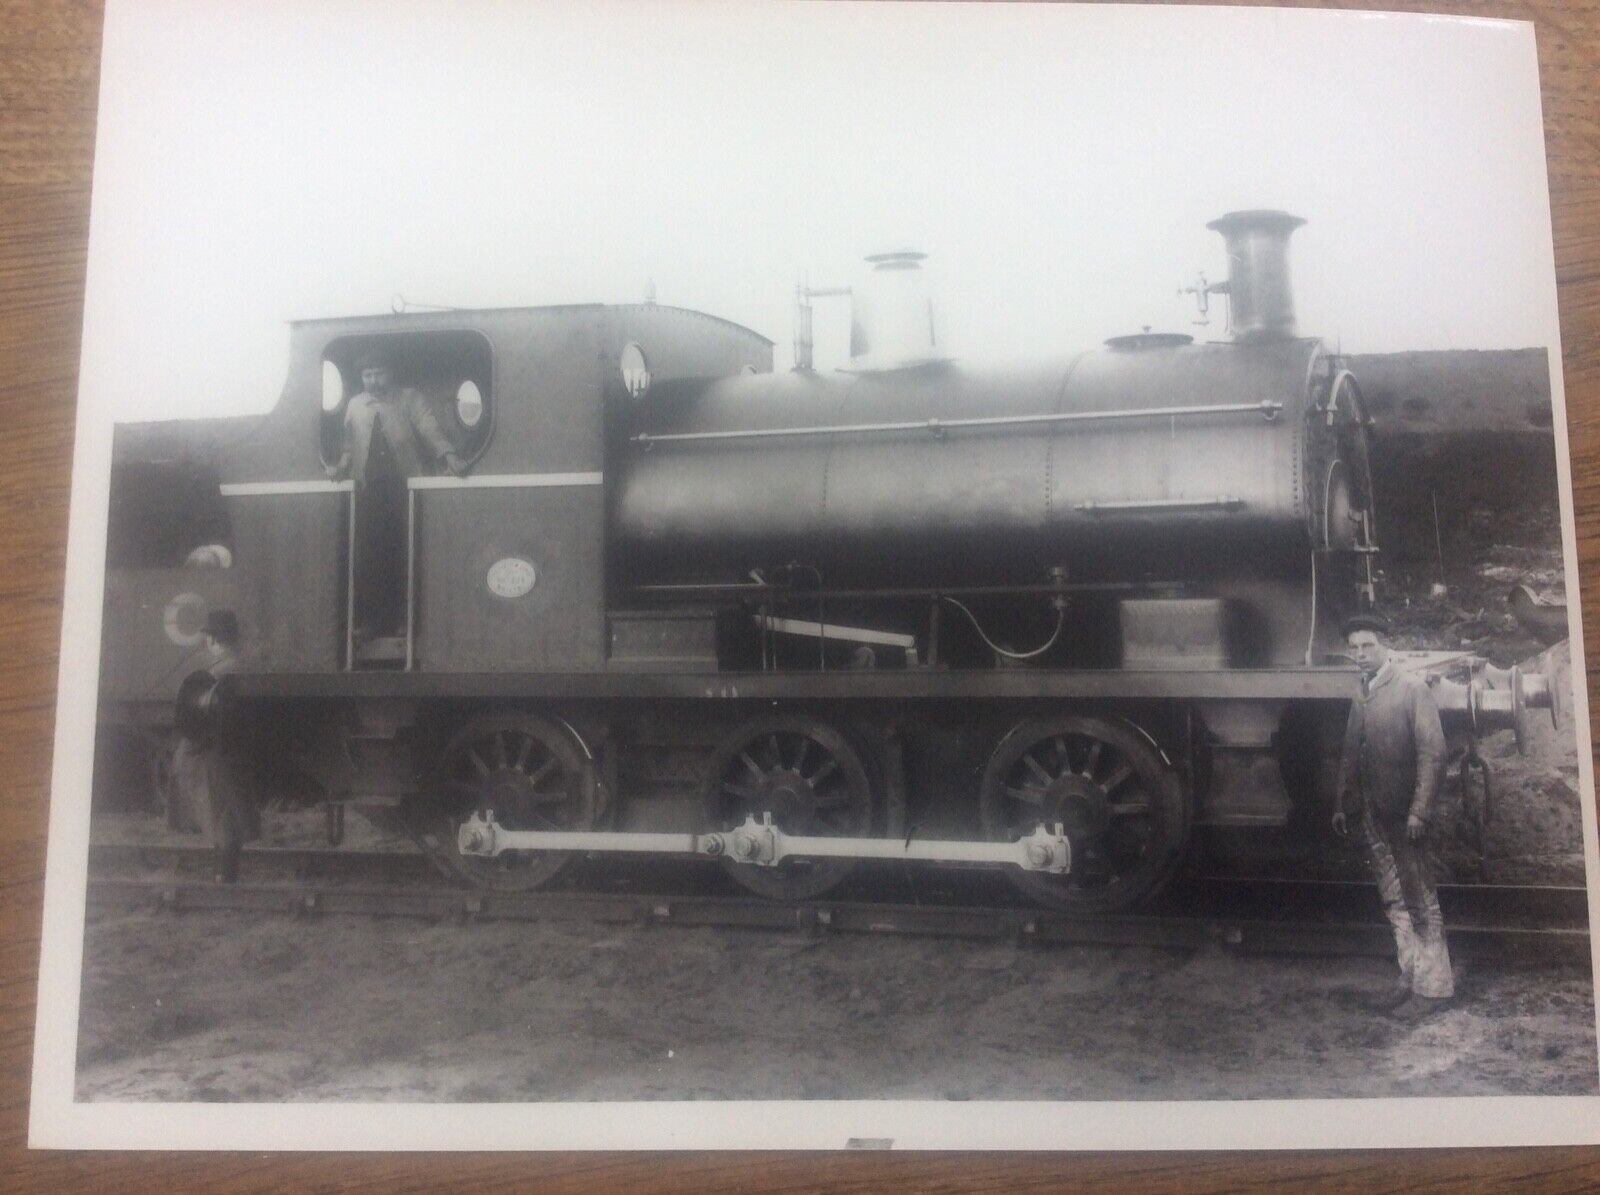 Scunthorpe British Steel Industrial Photograph Print Railway Bristol Loco 8x6”